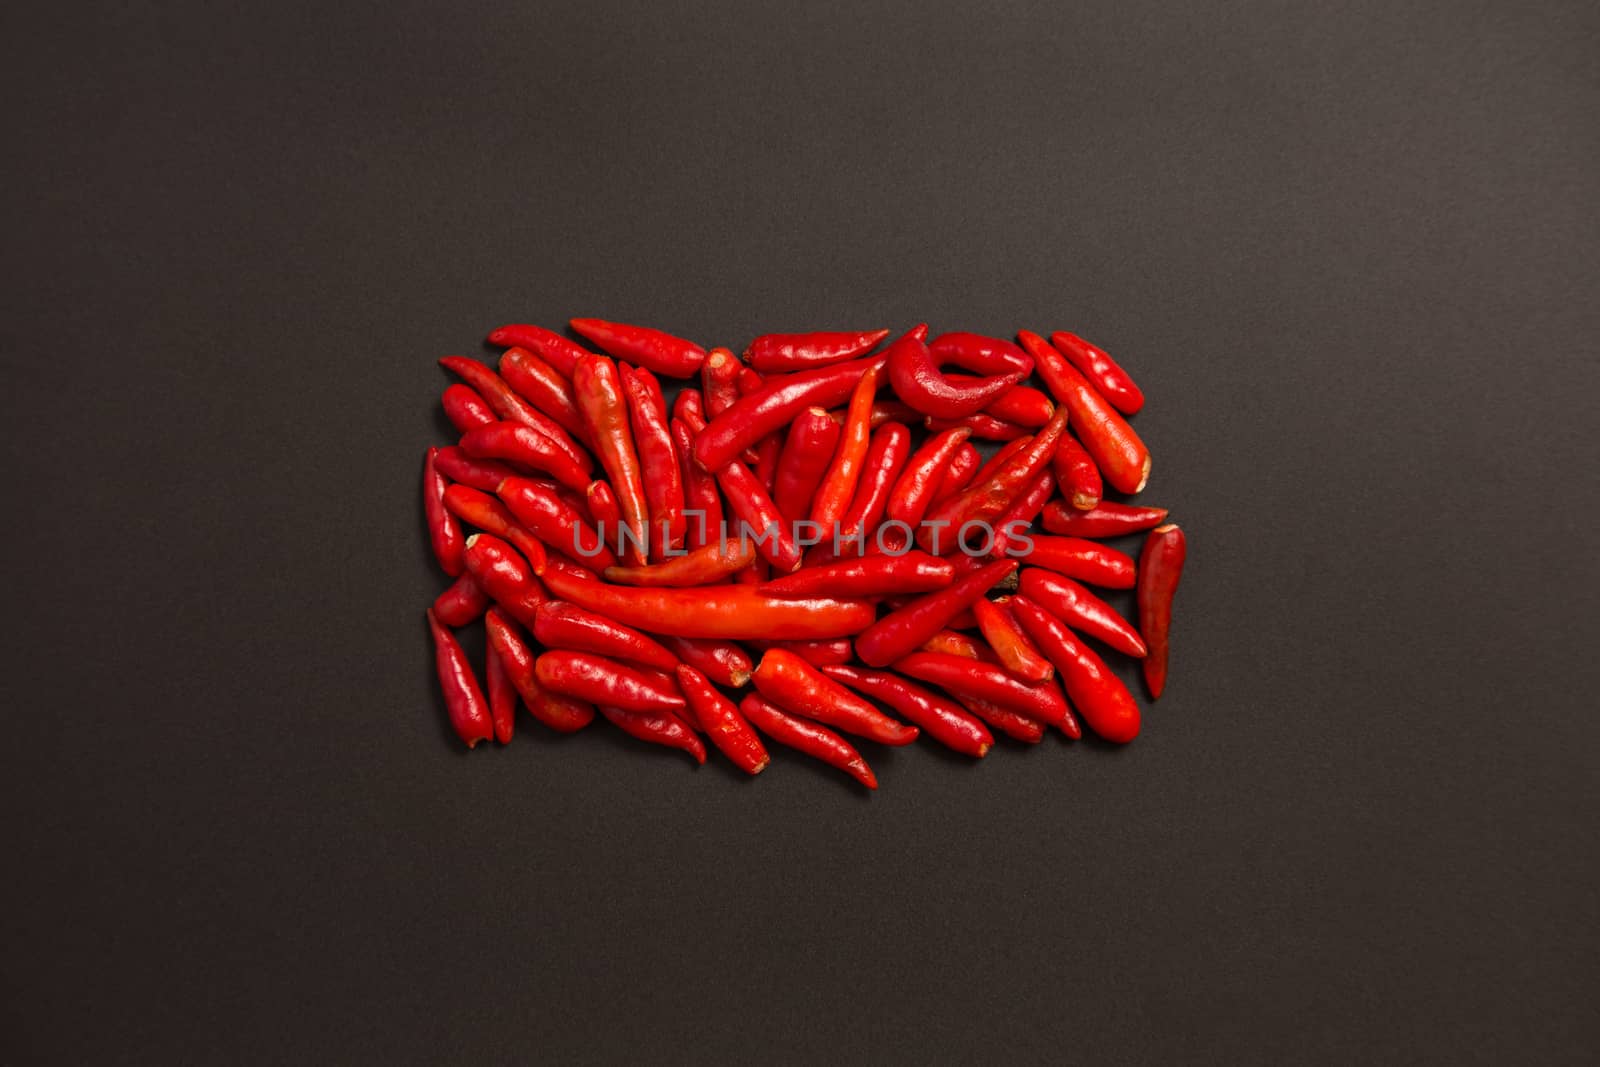 Non-stem red bird eye chili pepper on grey background 